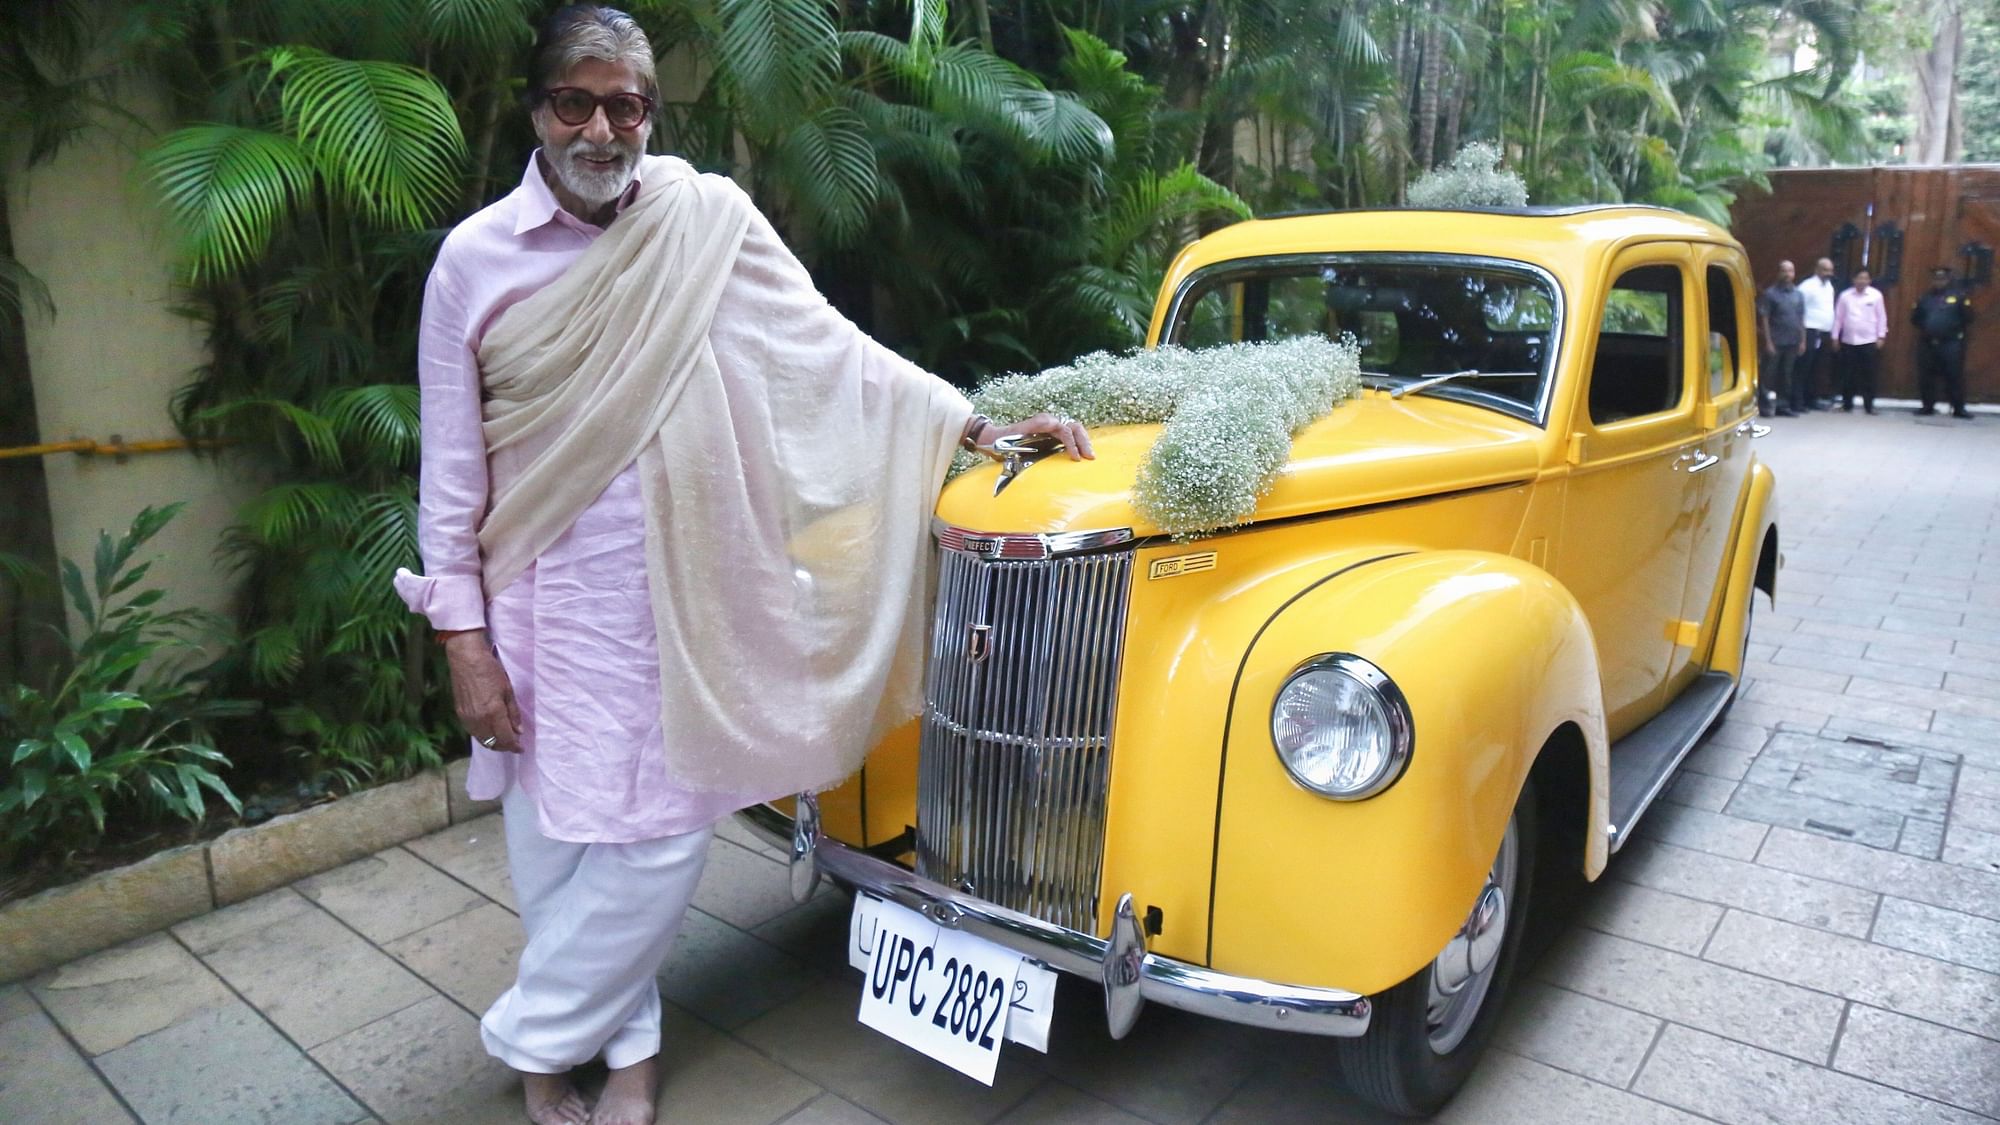 Amitabh Bachchan strikes a pose with the car.